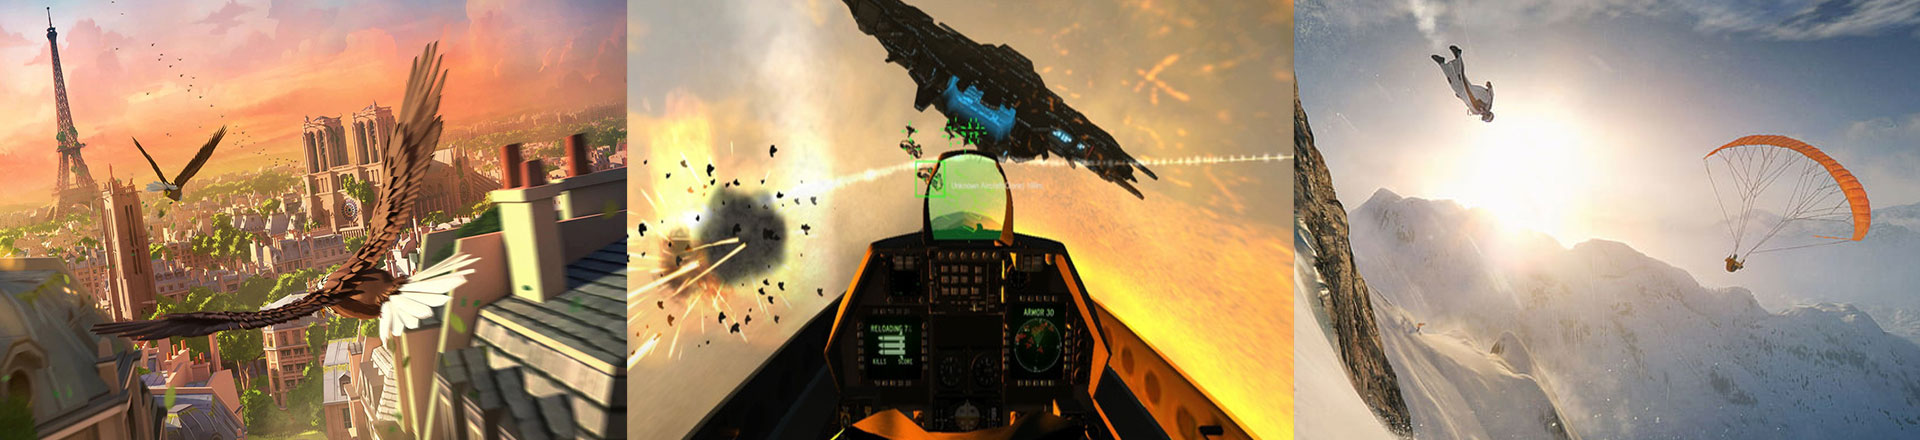 Virtual Rcades in Kelowna provides incredible flight themed virtual reality experiences.